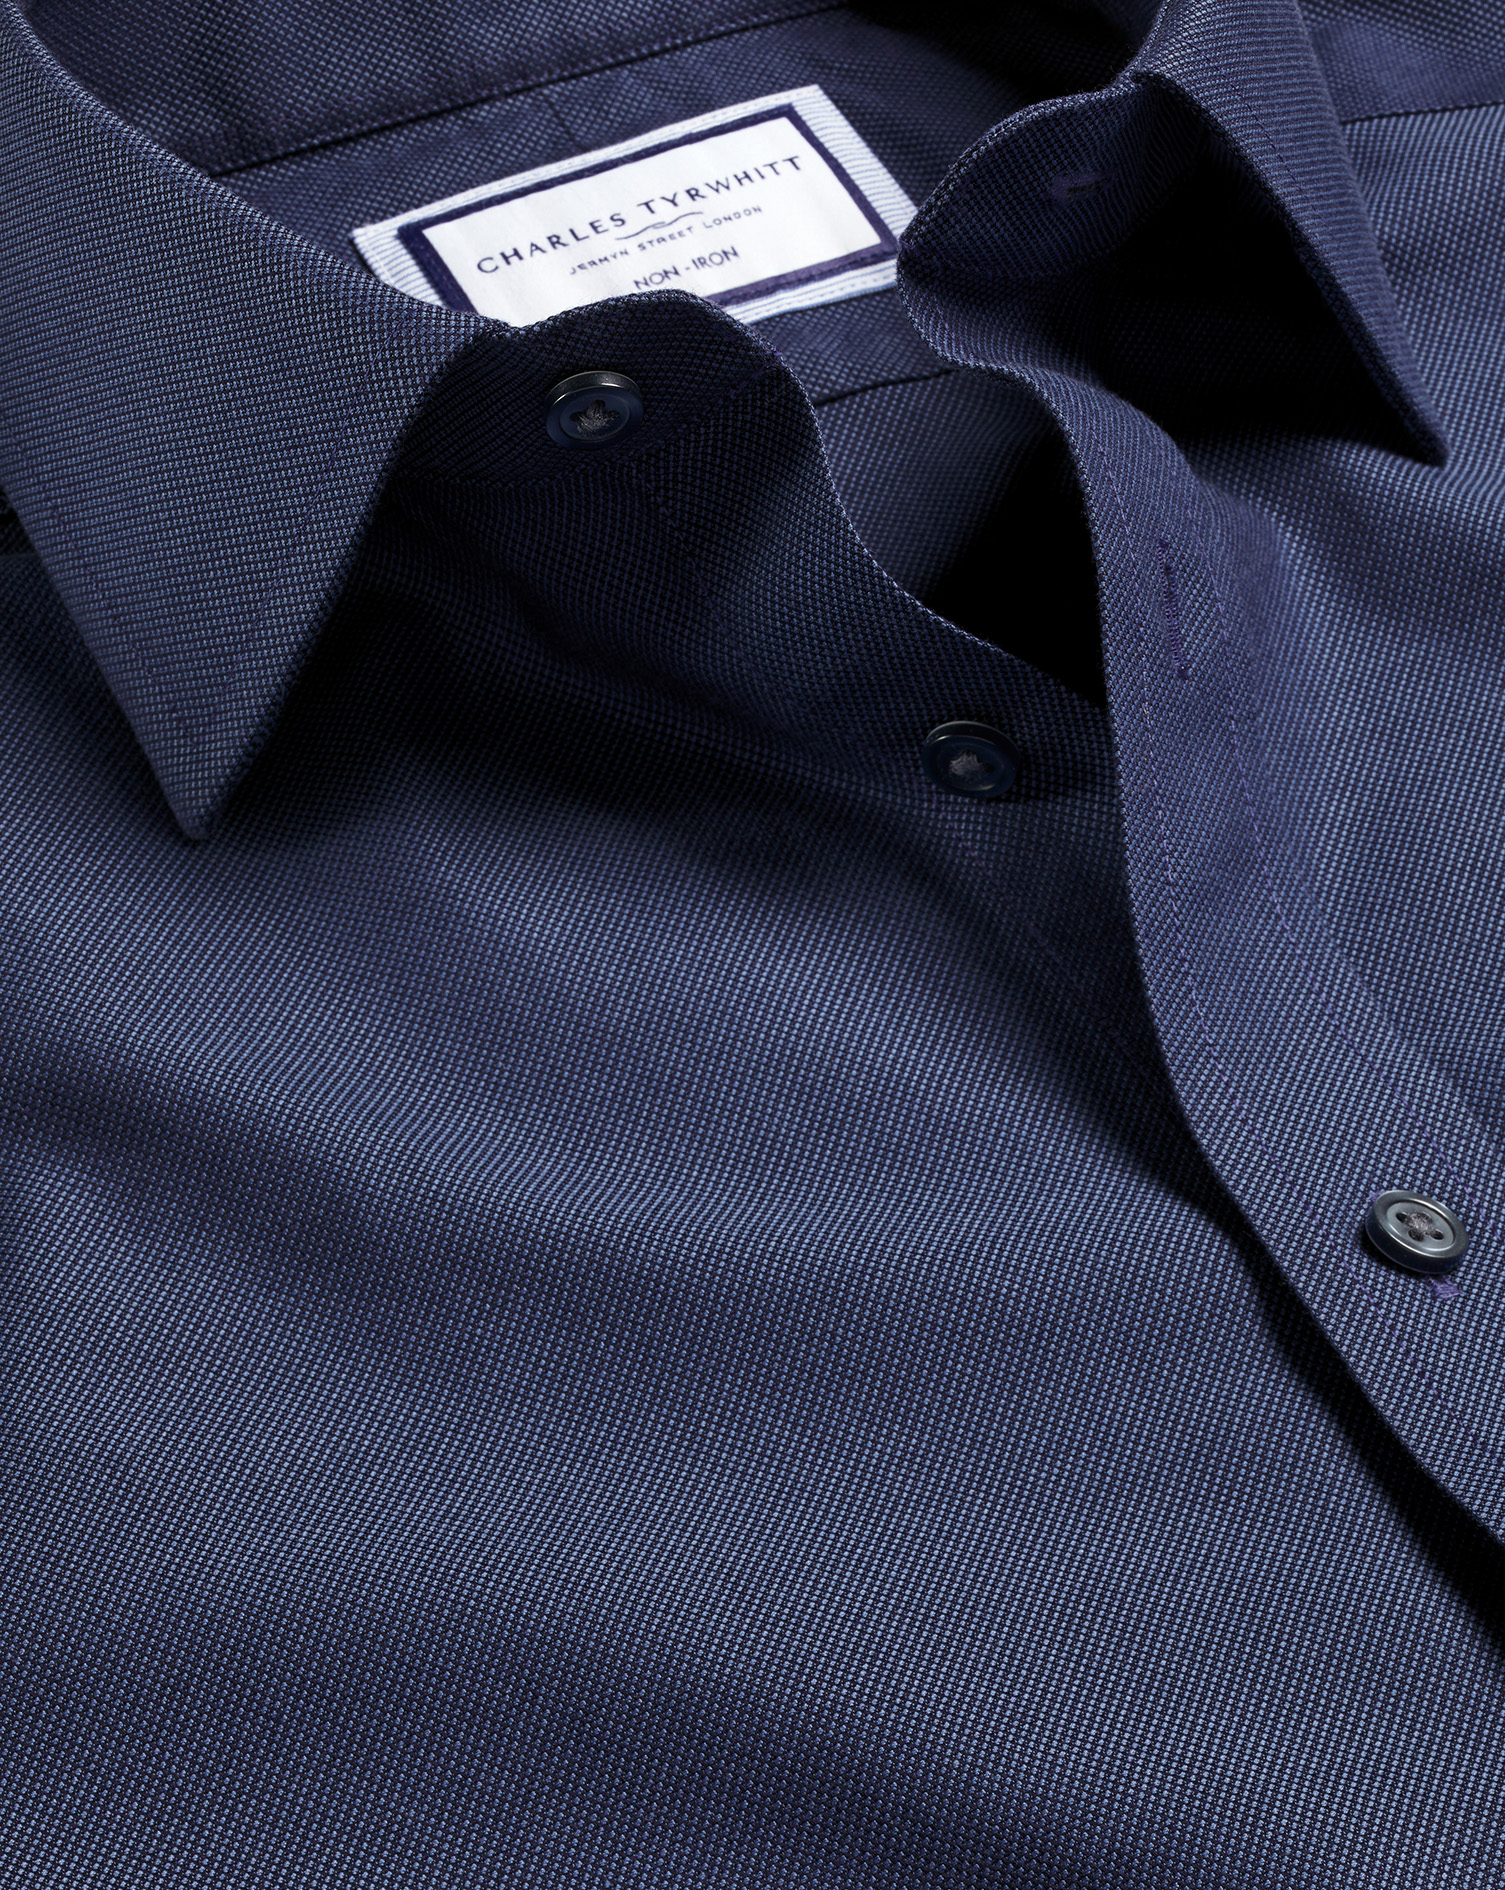 Men's Charles Tyrwhitt Non-Iron Royal Oxford Dress Shirt - French Blue French Cuff Size 16.5/35 Cott